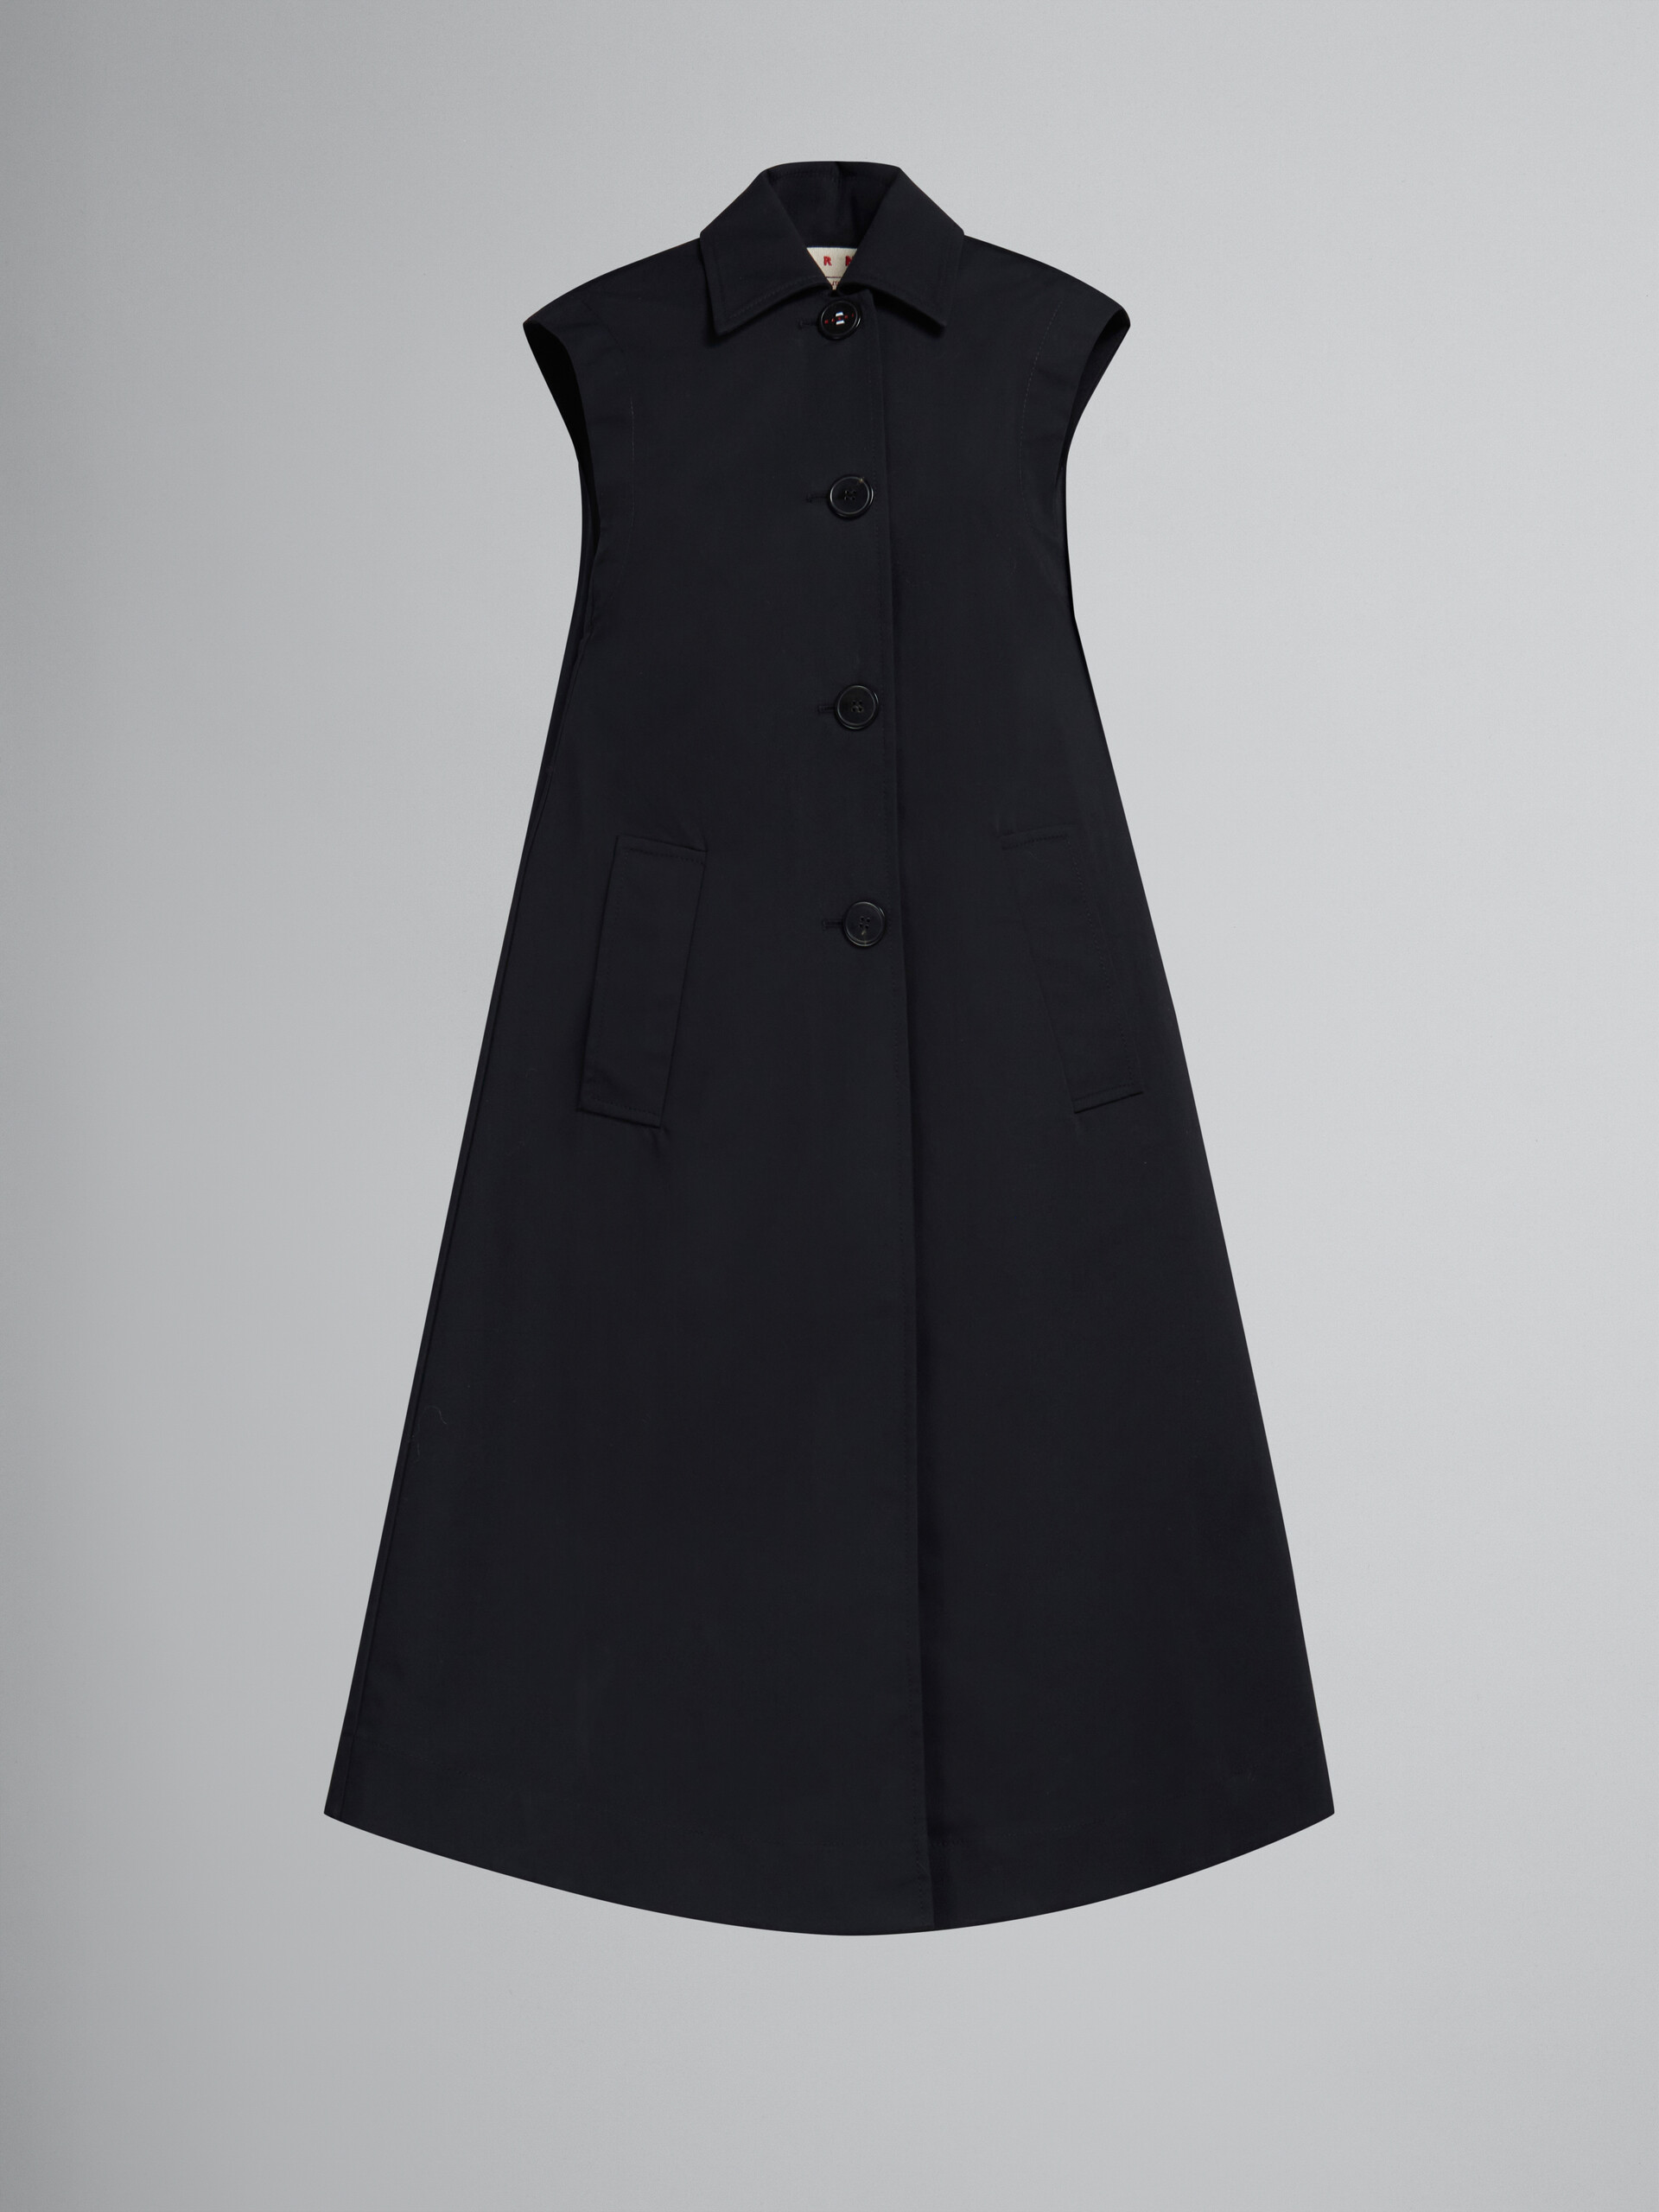 Black bonded cotton cocoon dress - Waistcoat - Image 1